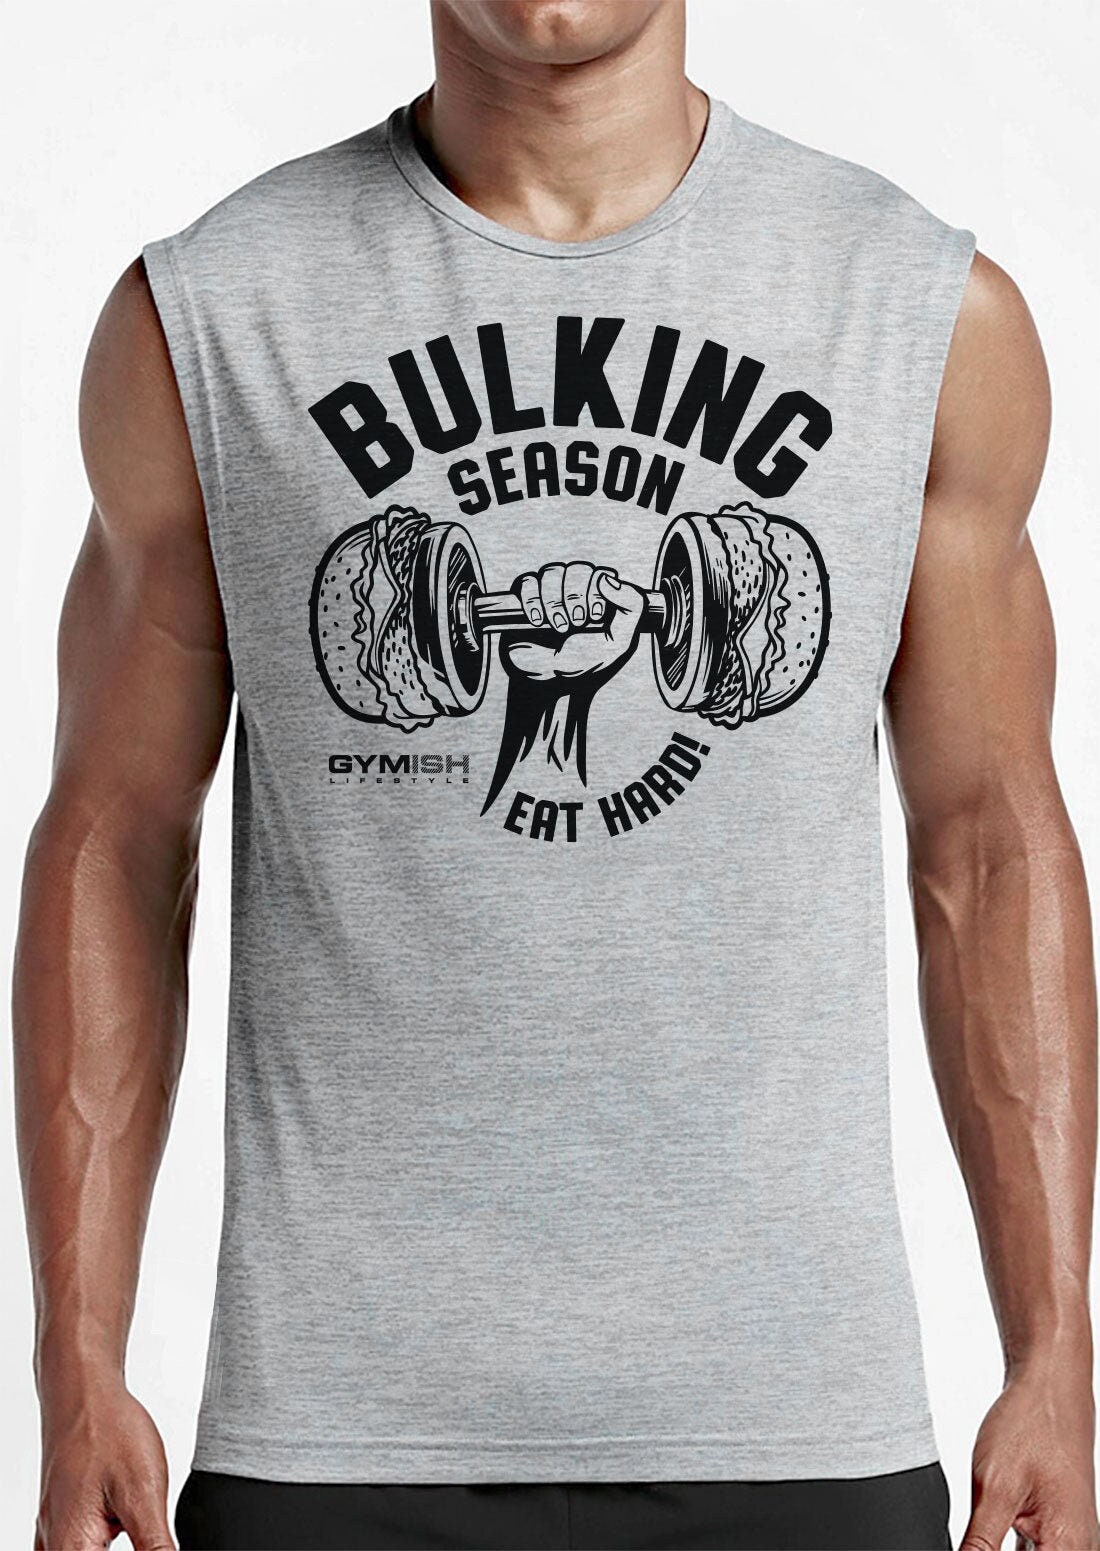 gambling Mand tynd Bulking Season Muscle Tank Top Sleeveless Workout Shirt - Etsy